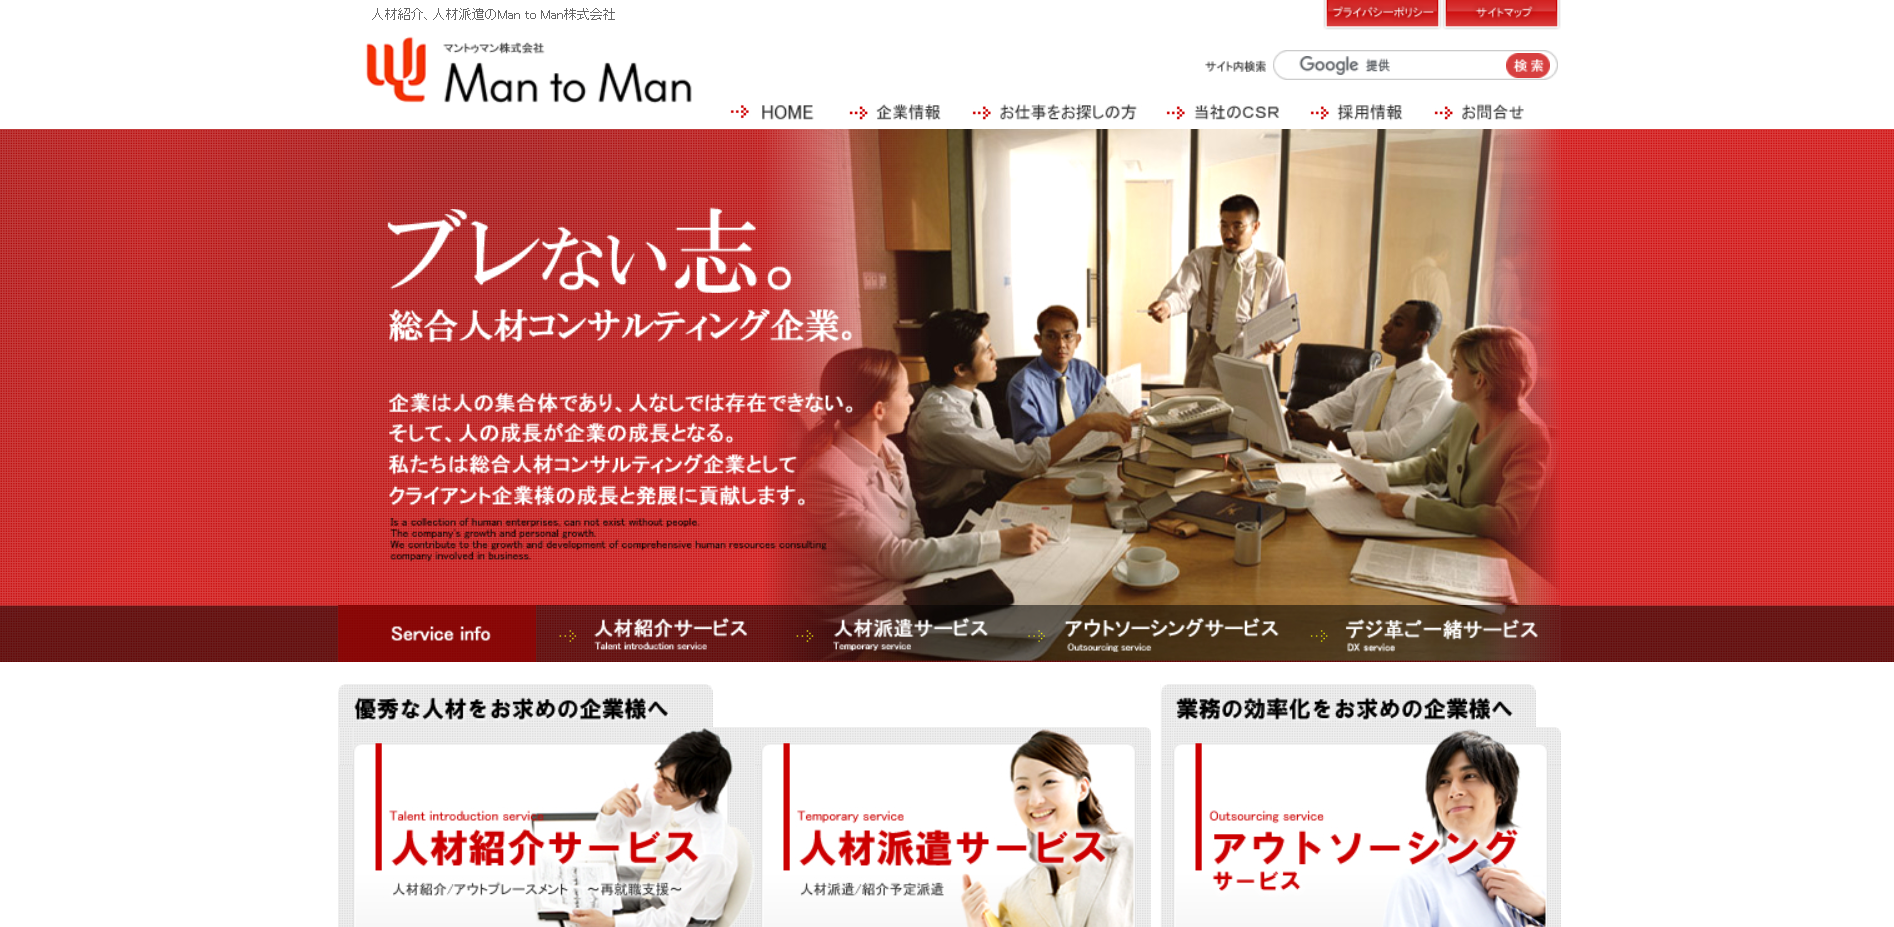 Man to Man株式会社のMantoMan株式会社:データ入力・集計サービス